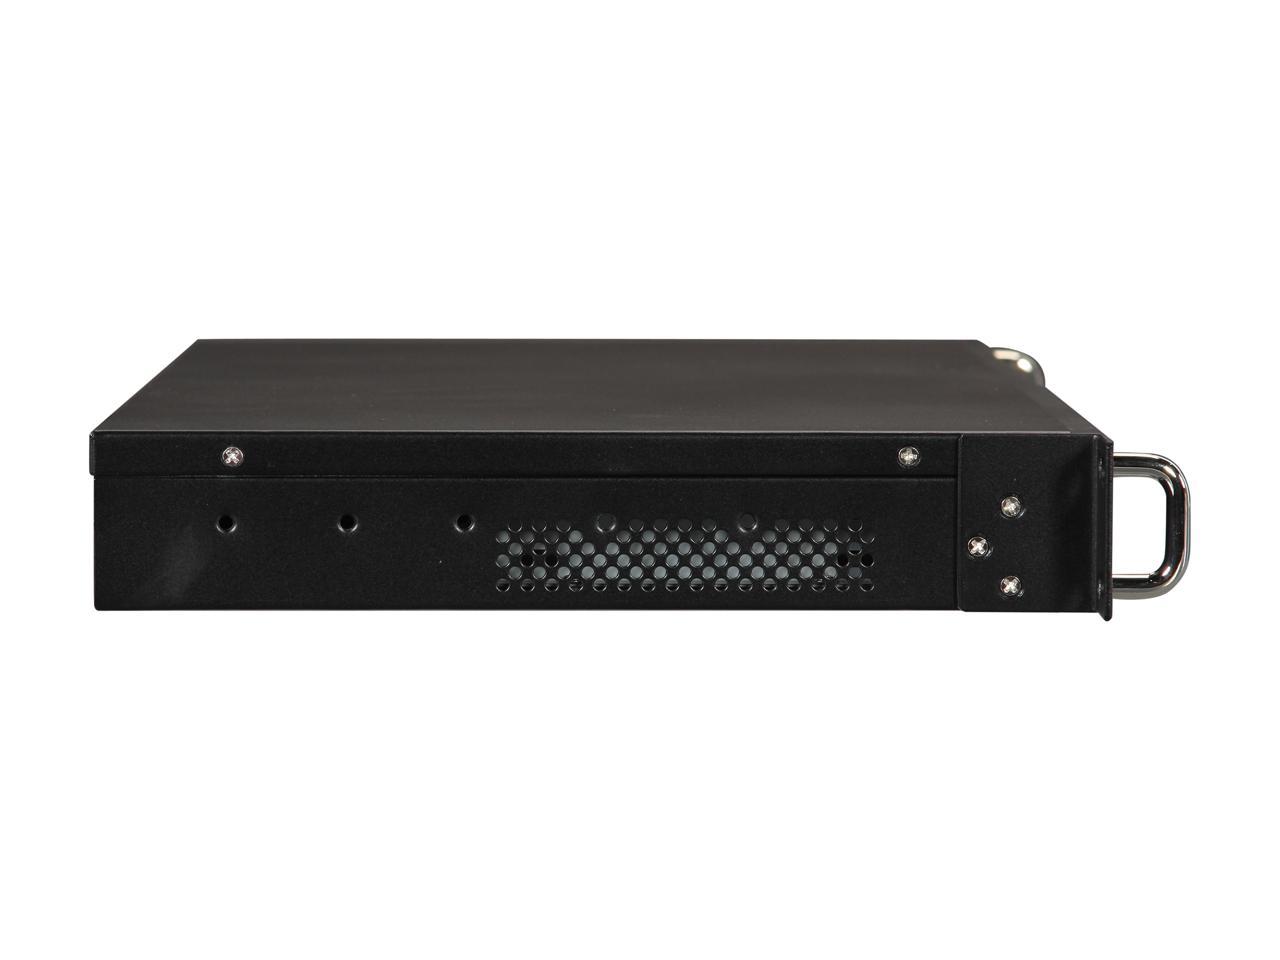 Athena Power RM-1U100D Black Aluminum / Steel 1U Rackmount Server Case 1 External 5.25" Drive Bays